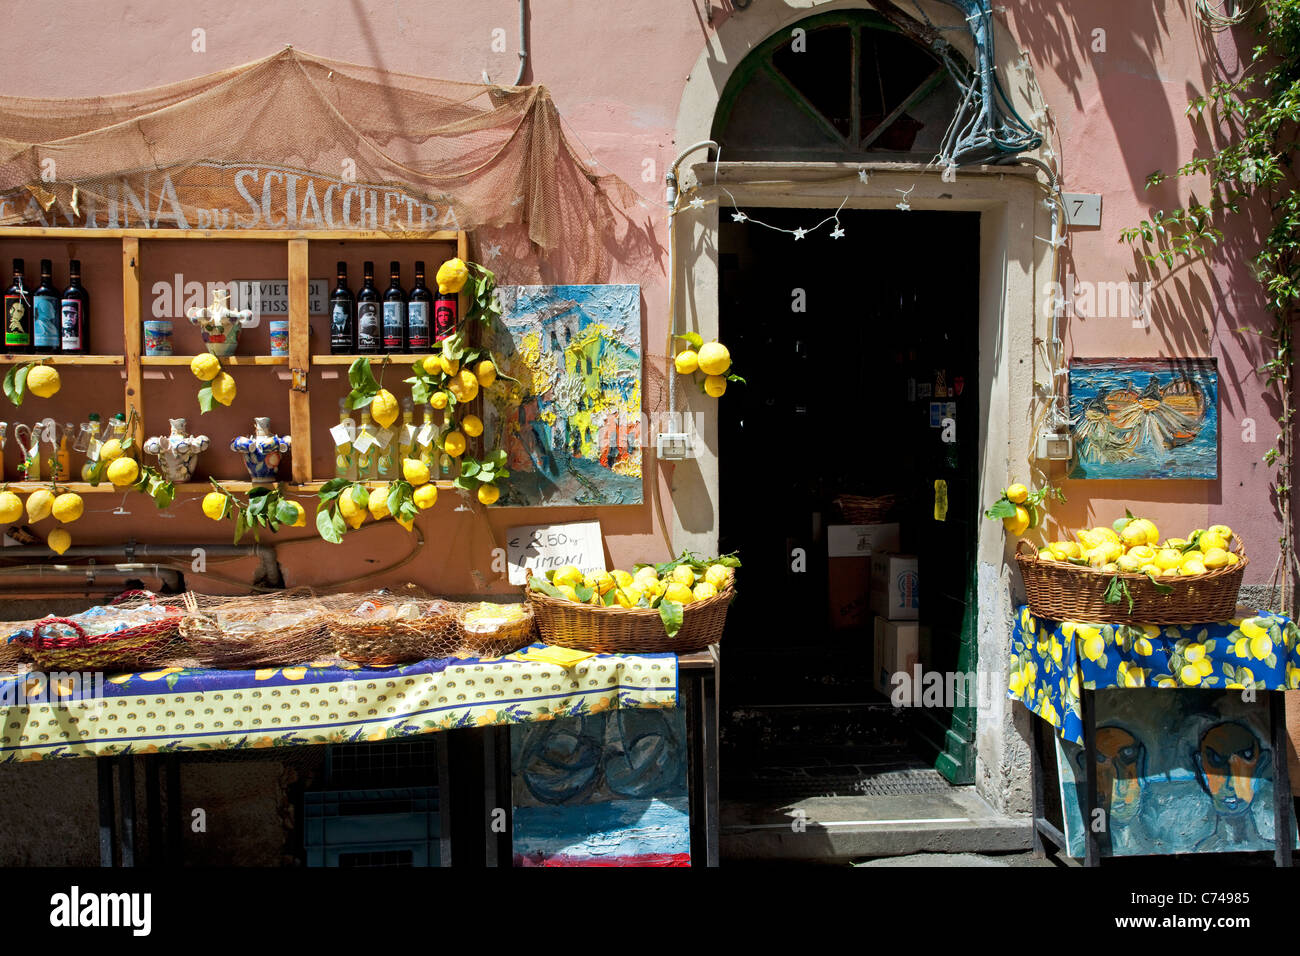 Lemons mediterran sea hi-res stock photography and images - Alamy